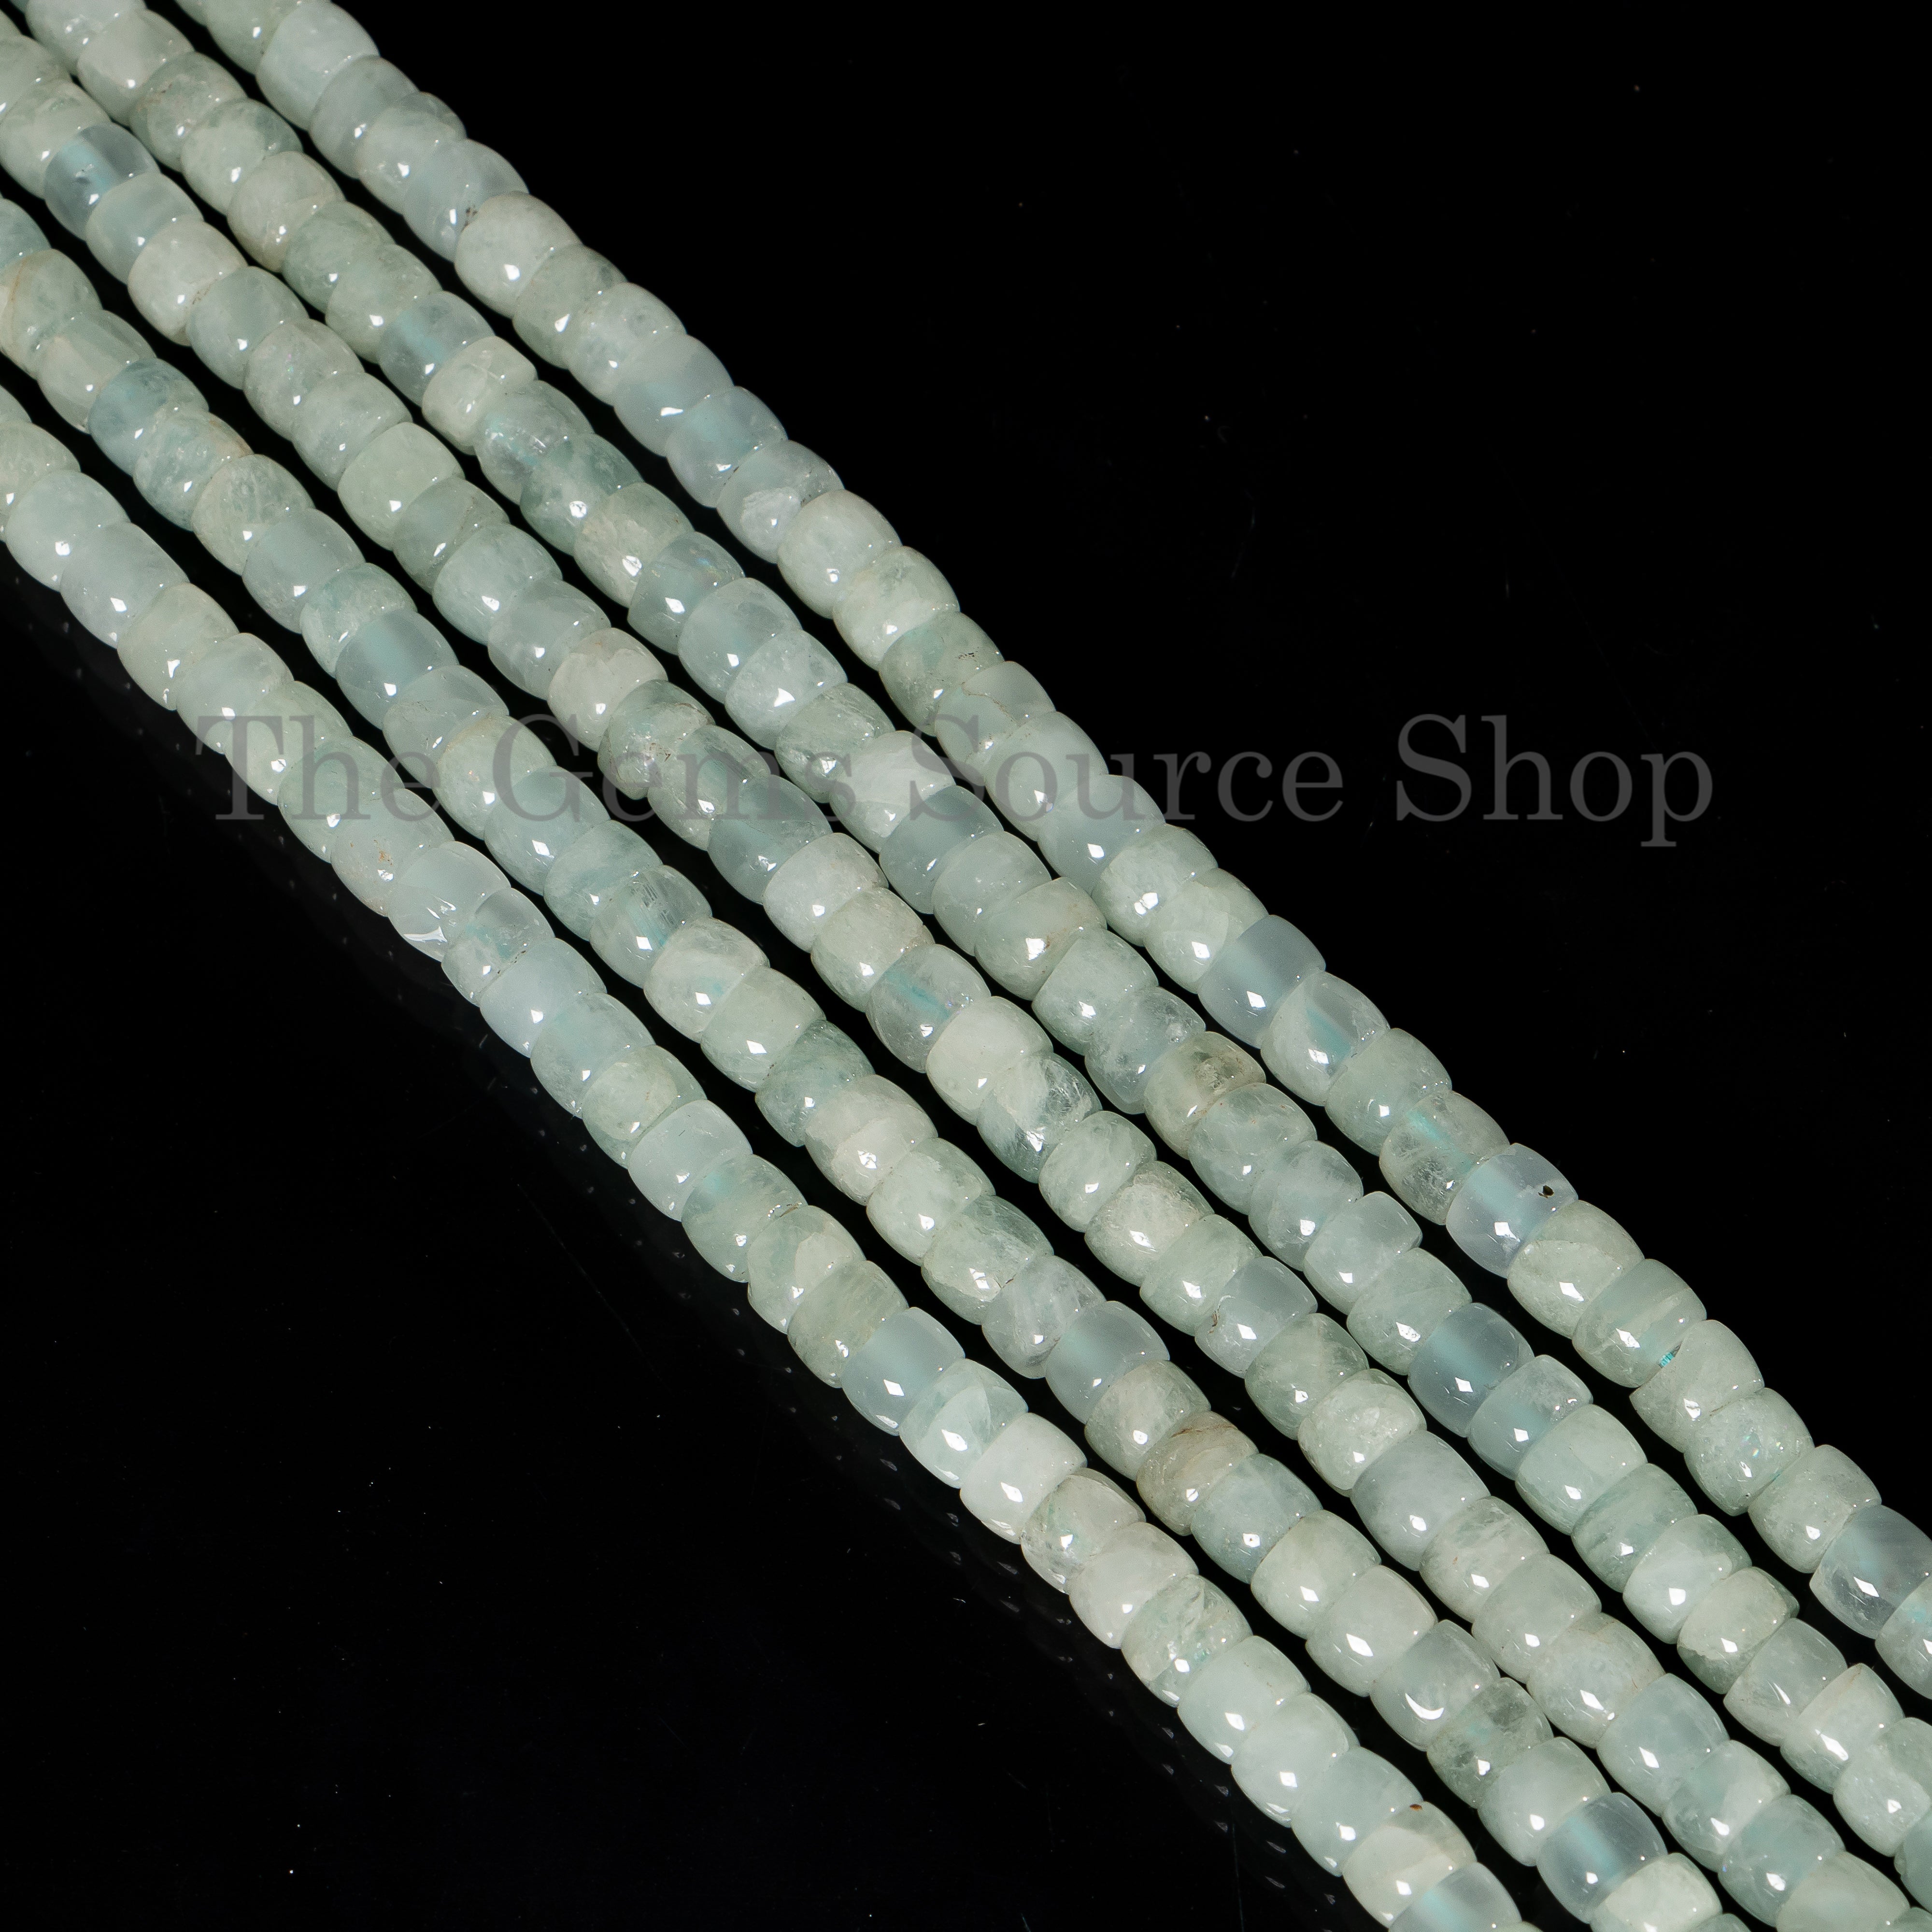 Natural Aquamarine Heishi Beads, Aquamarine Tyre Shape Beads, Green Aquamarine Gemstone Tyre Beads for Jewelry Making. TGS-5145